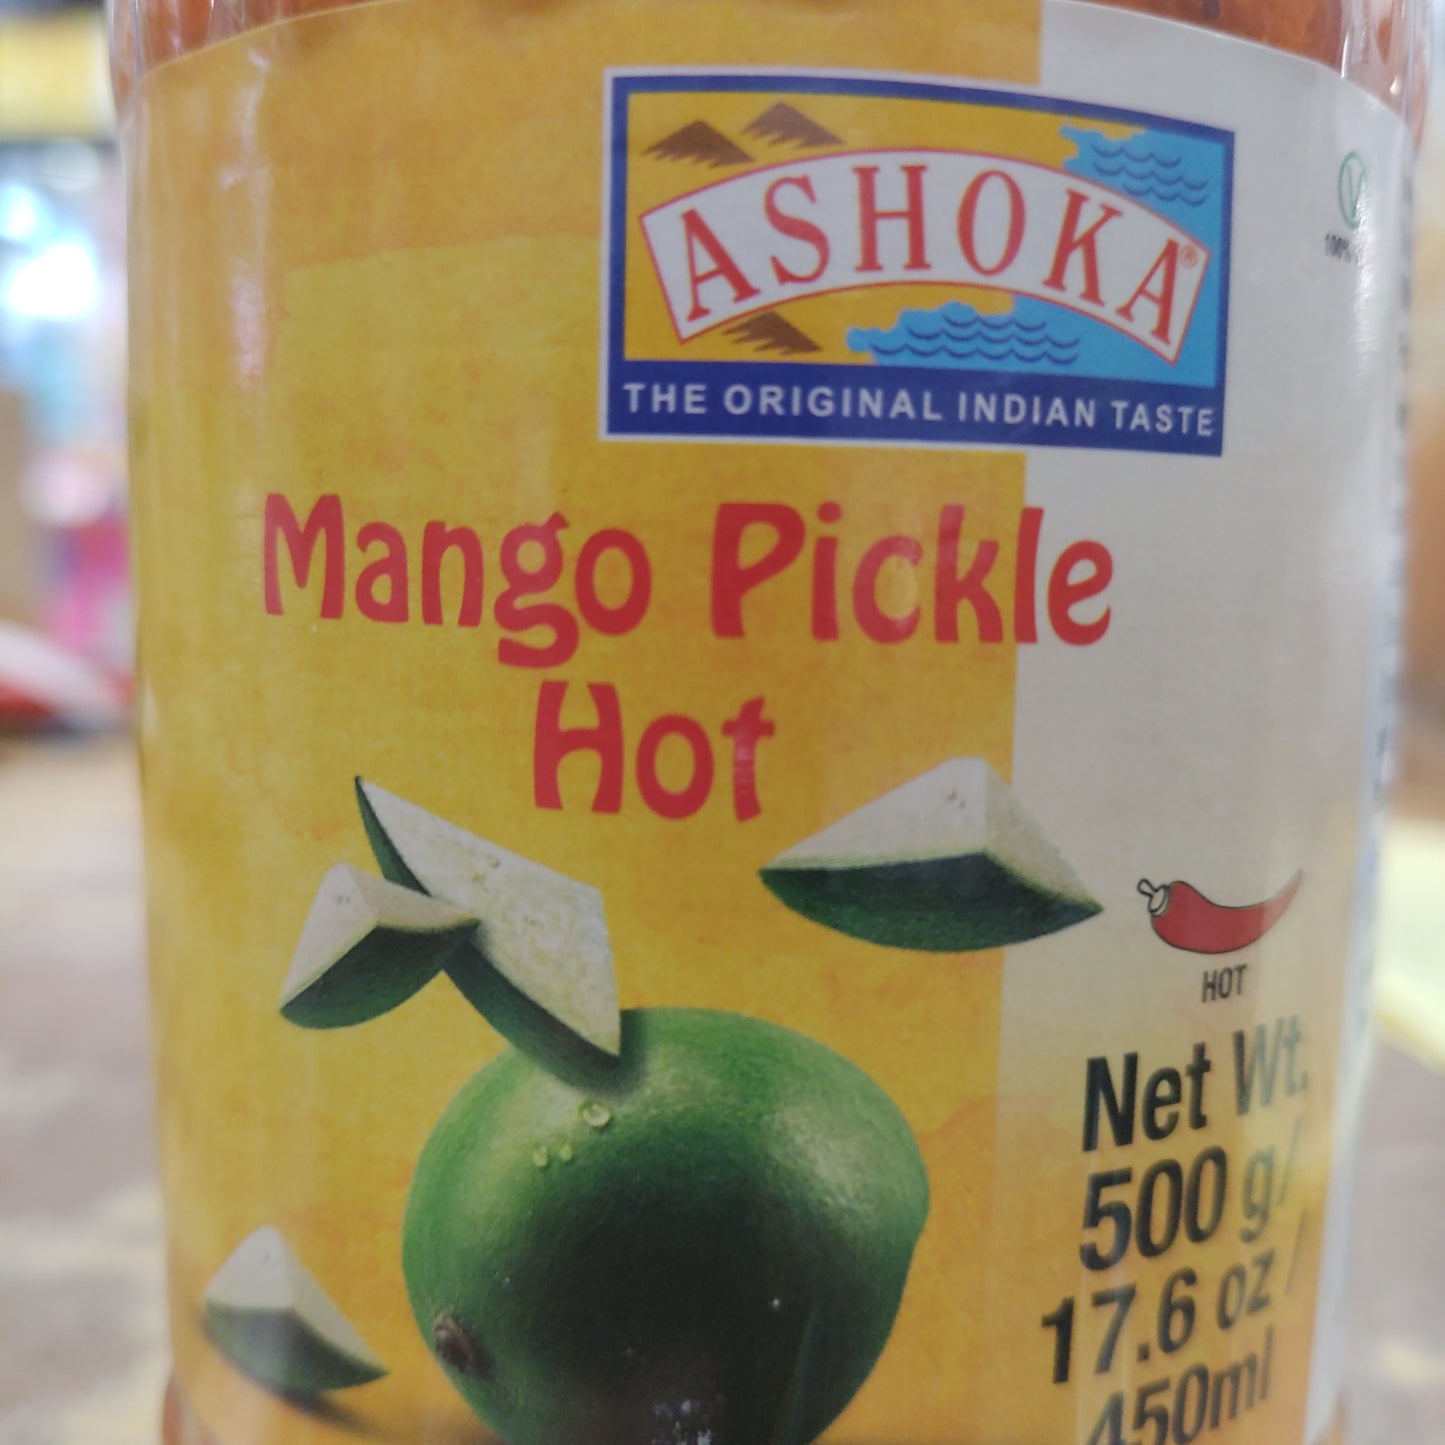 Ashoka Mango Pickle Hot 500 g